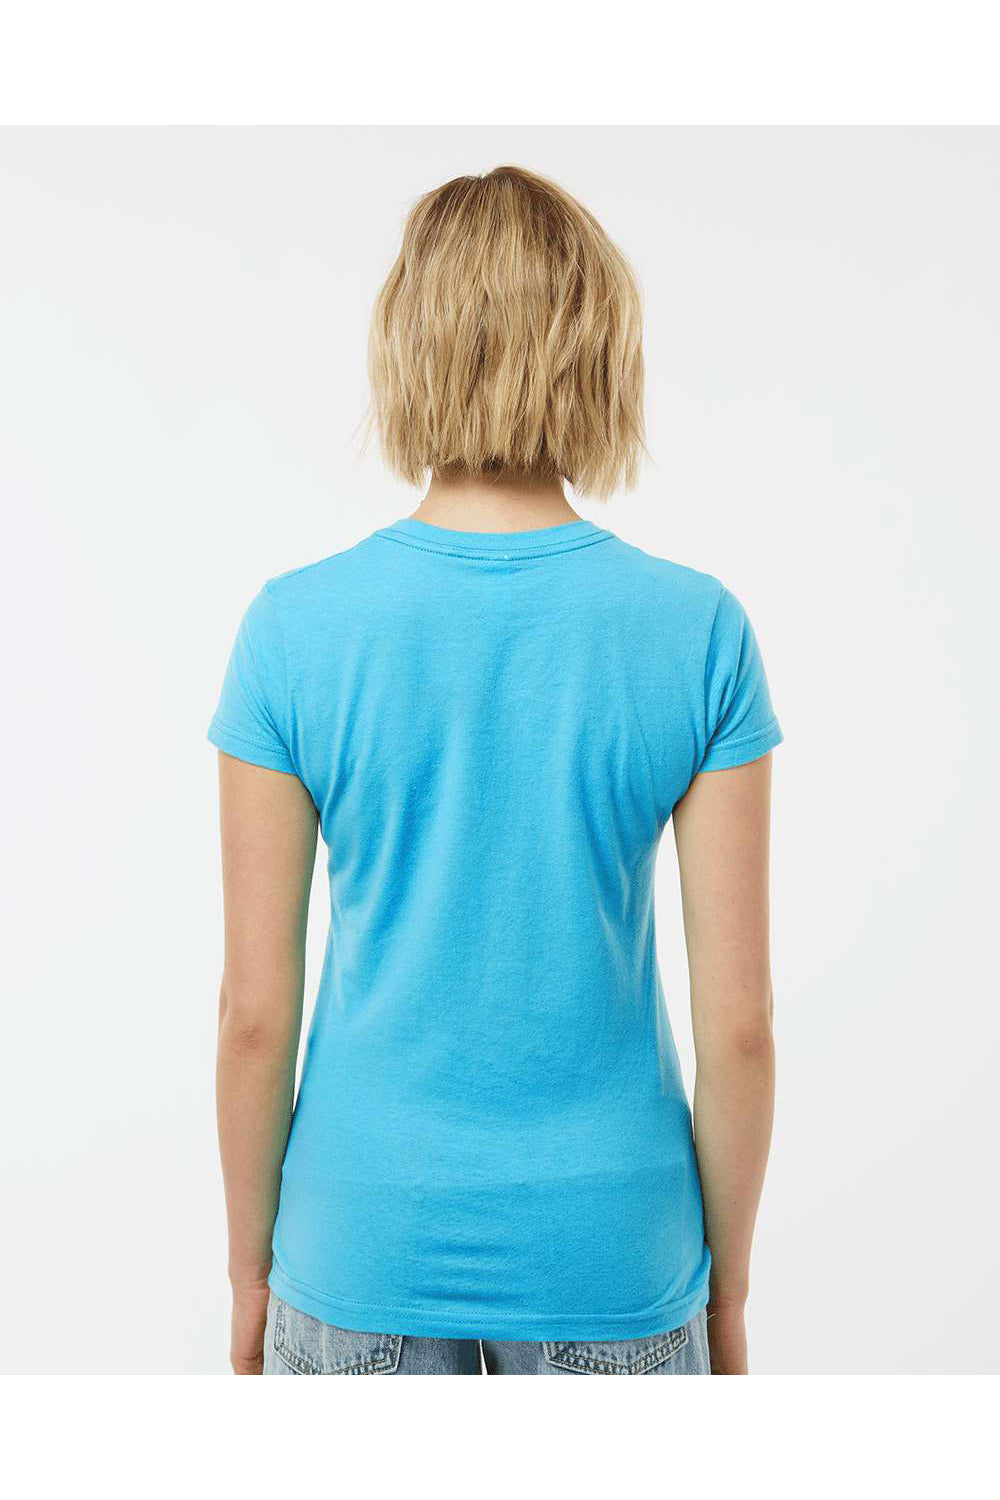 Tultex 213 Womens Fine Jersey Slim Fit Short Sleeve Crewneck T-Shirt Aqua Blue Model Back